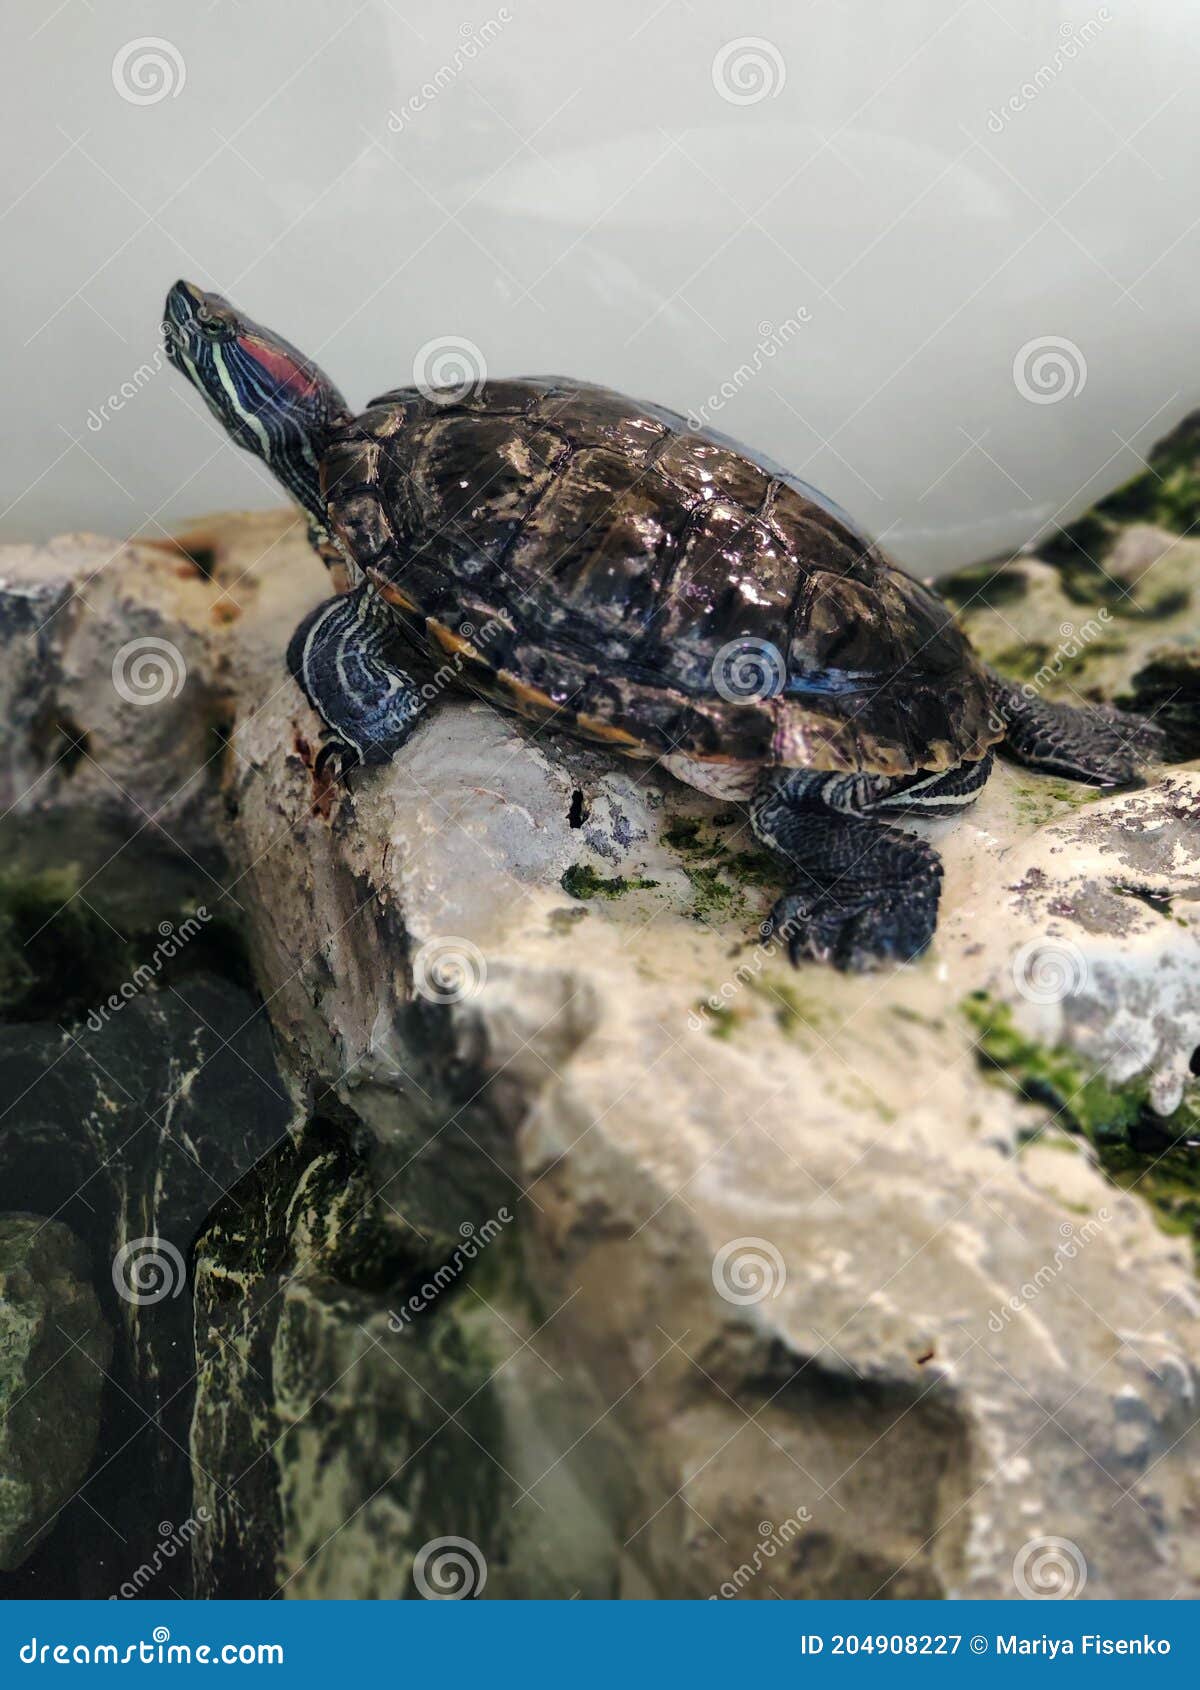 Beautiful Turtle in an Aquarium Sitting on a Stone Stock Image - Image of  head, armor: 204908227